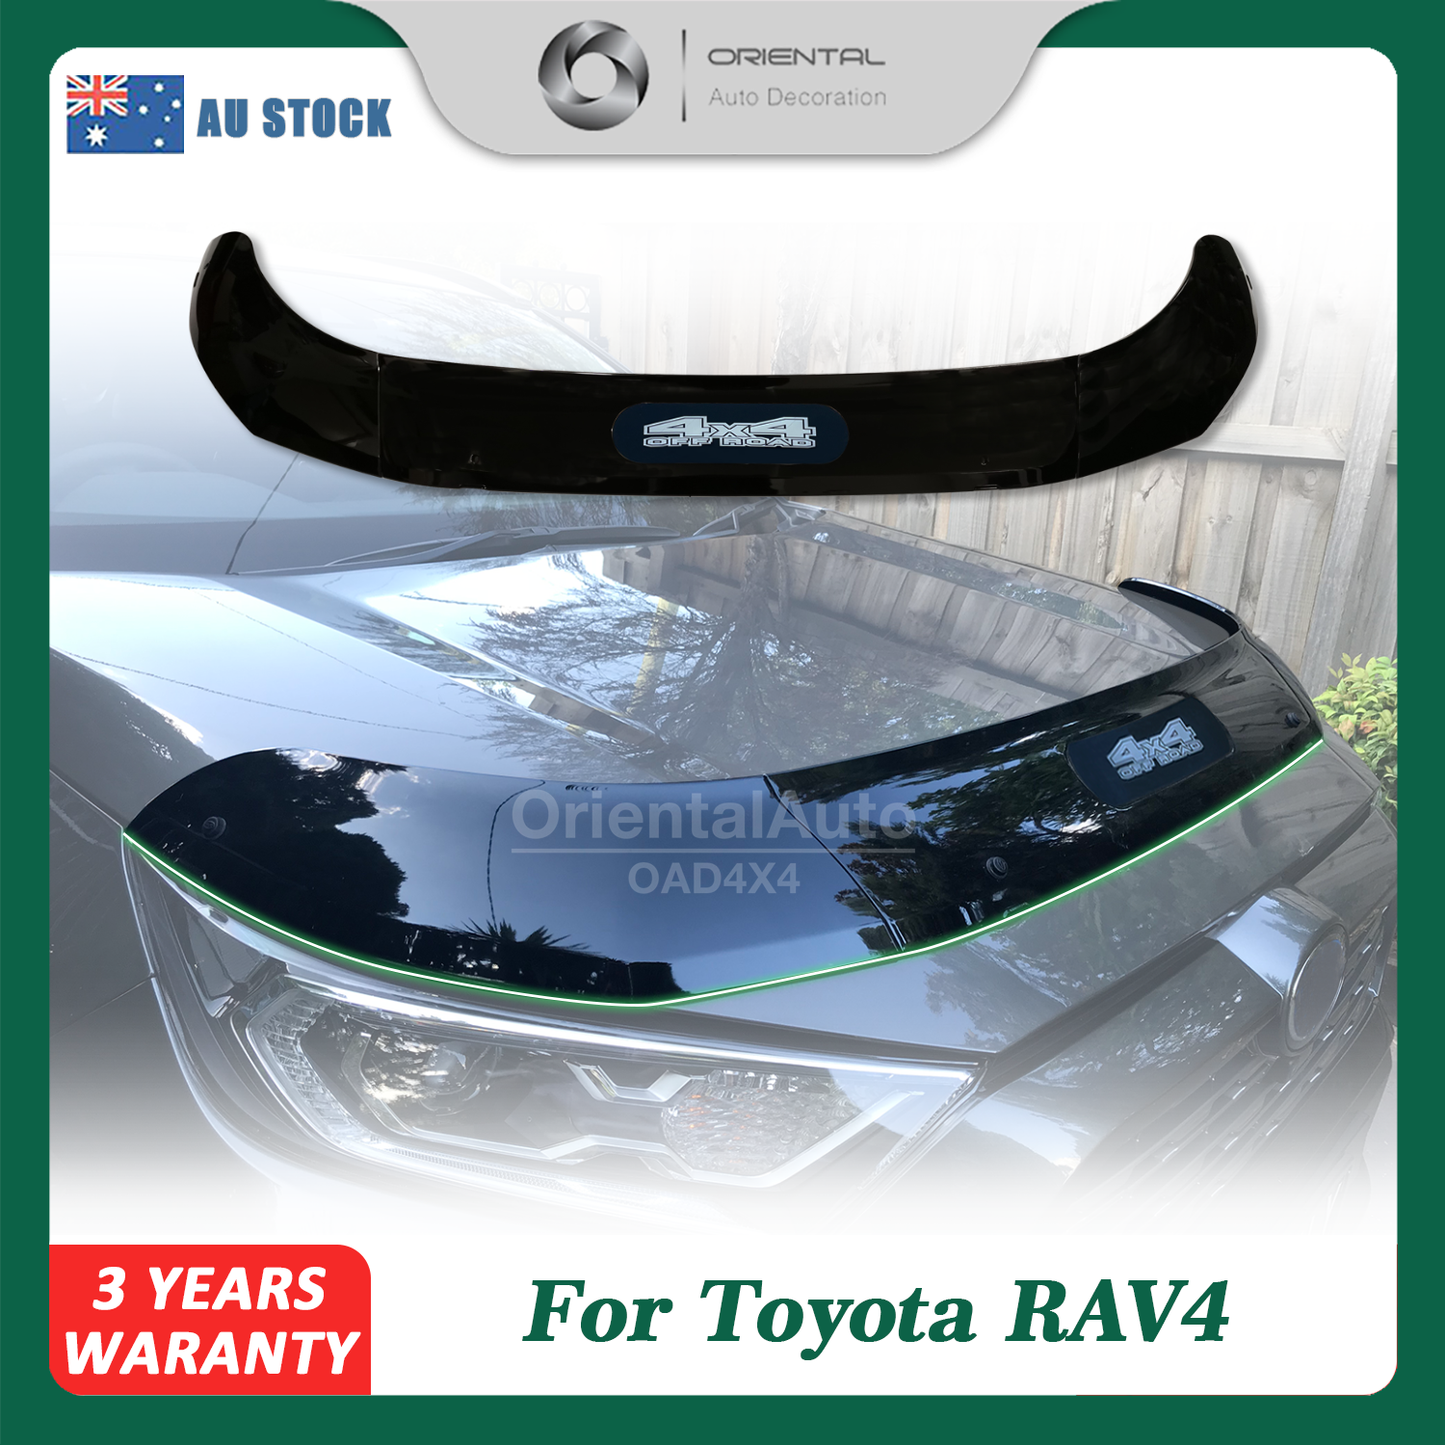 Injection Modeling Exclusive Bonnet Protector for Toyota RAV4 2019+ / for RAV 4 Hood Protector Bonnet Guard